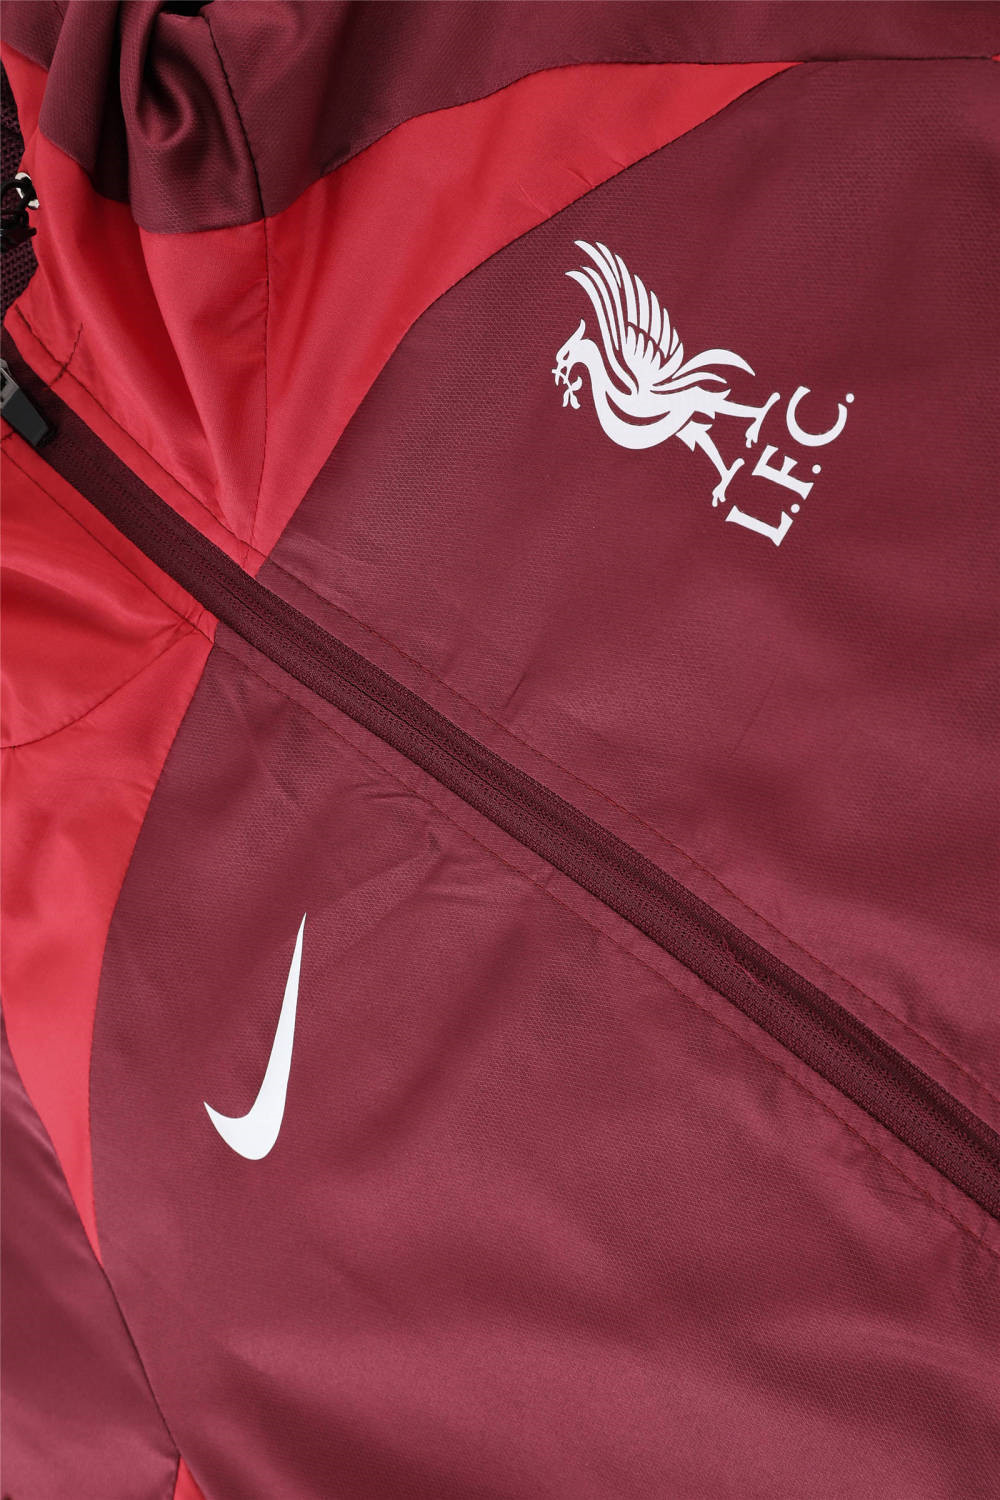 Liverpool All Weather Windrunner Soccer Jacket Burgundy 2021/22 Men's (Hoodie)